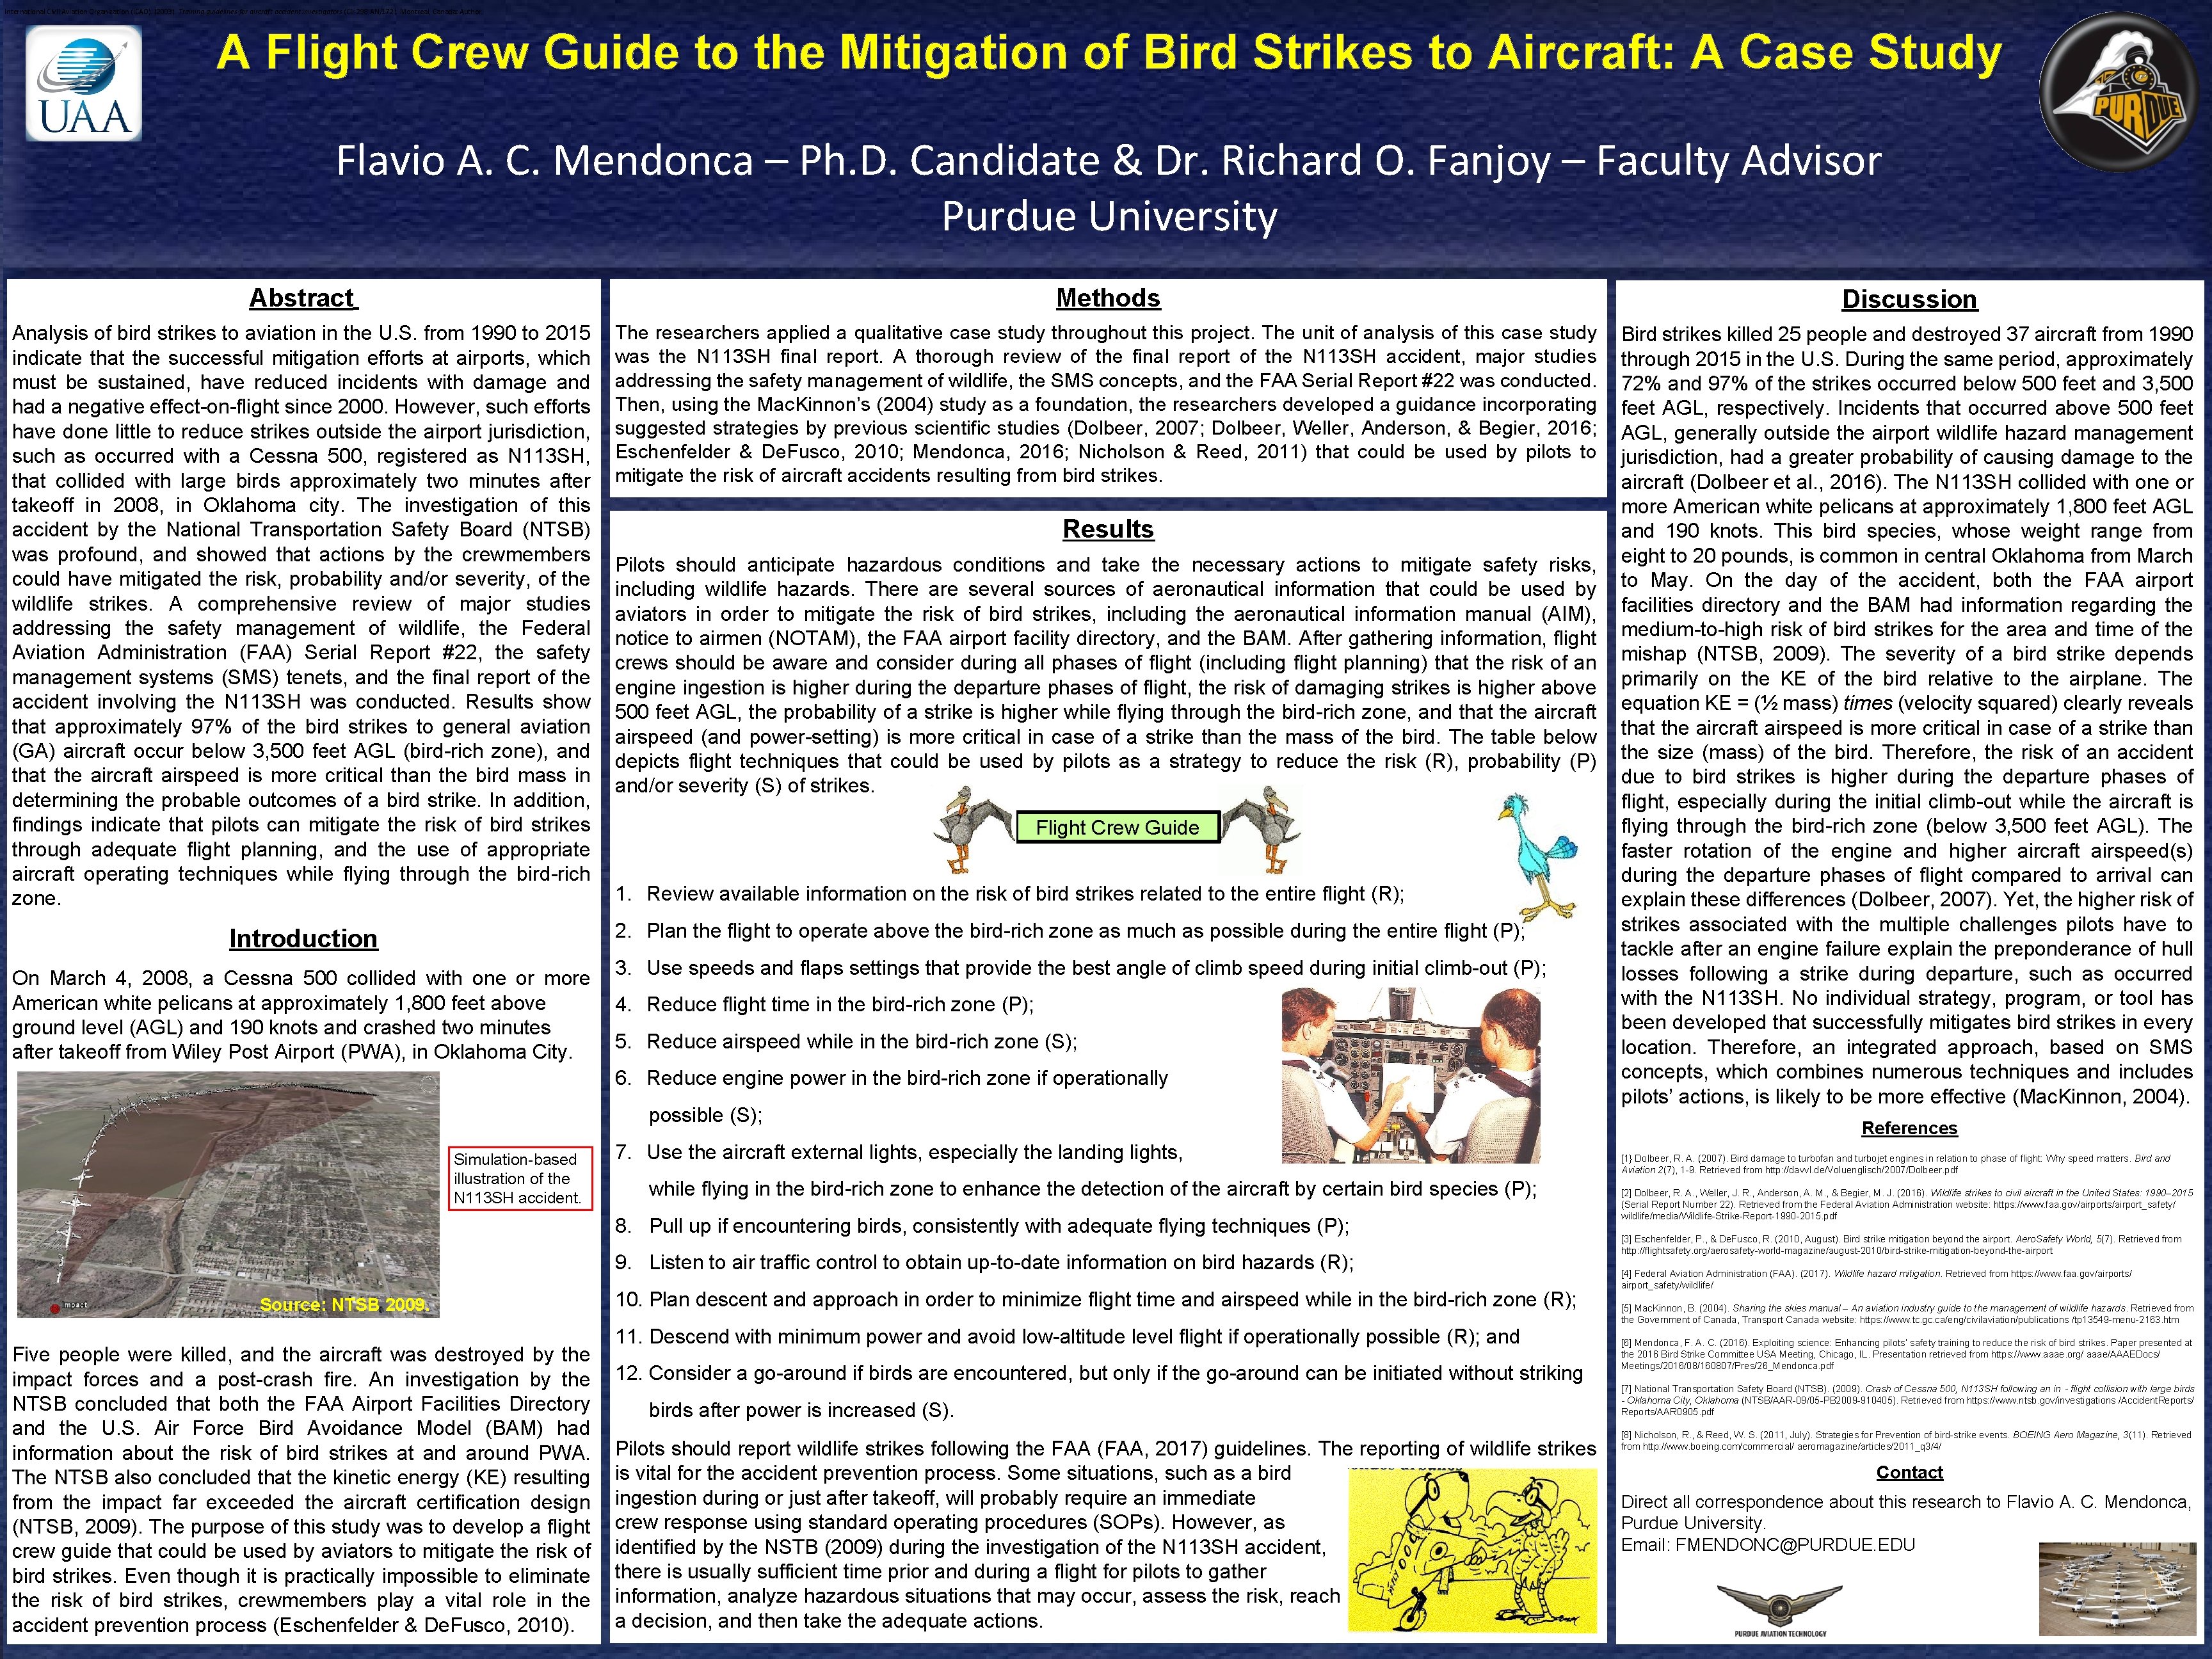 International Civil Aviation Organization (ICAO). (2003). Training guidelines for aircraft accident investigators (Cir 298